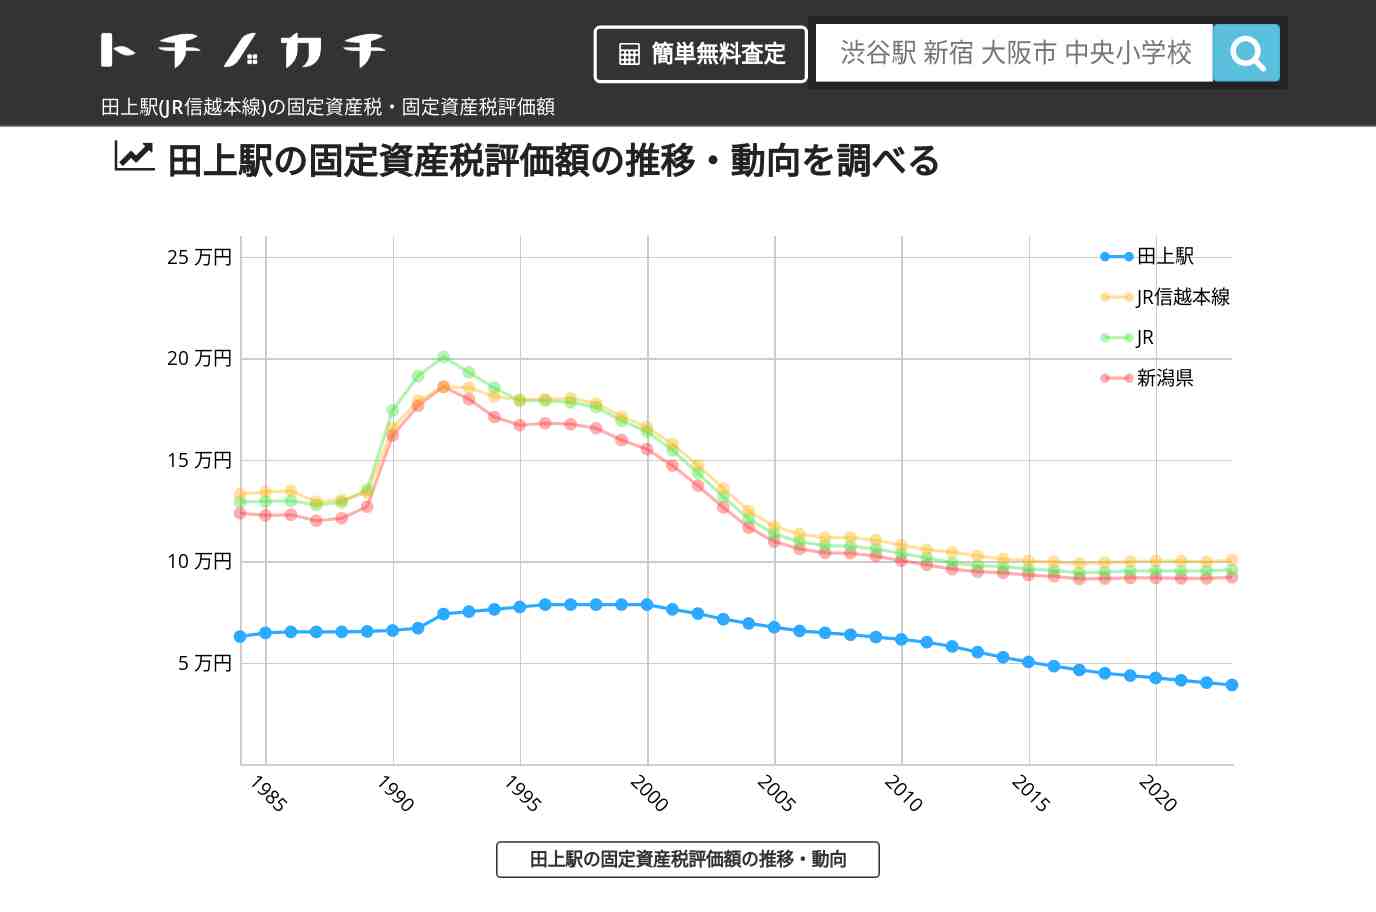 田上駅(JR信越本線)の固定資産税・固定資産税評価額 | トチノカチ